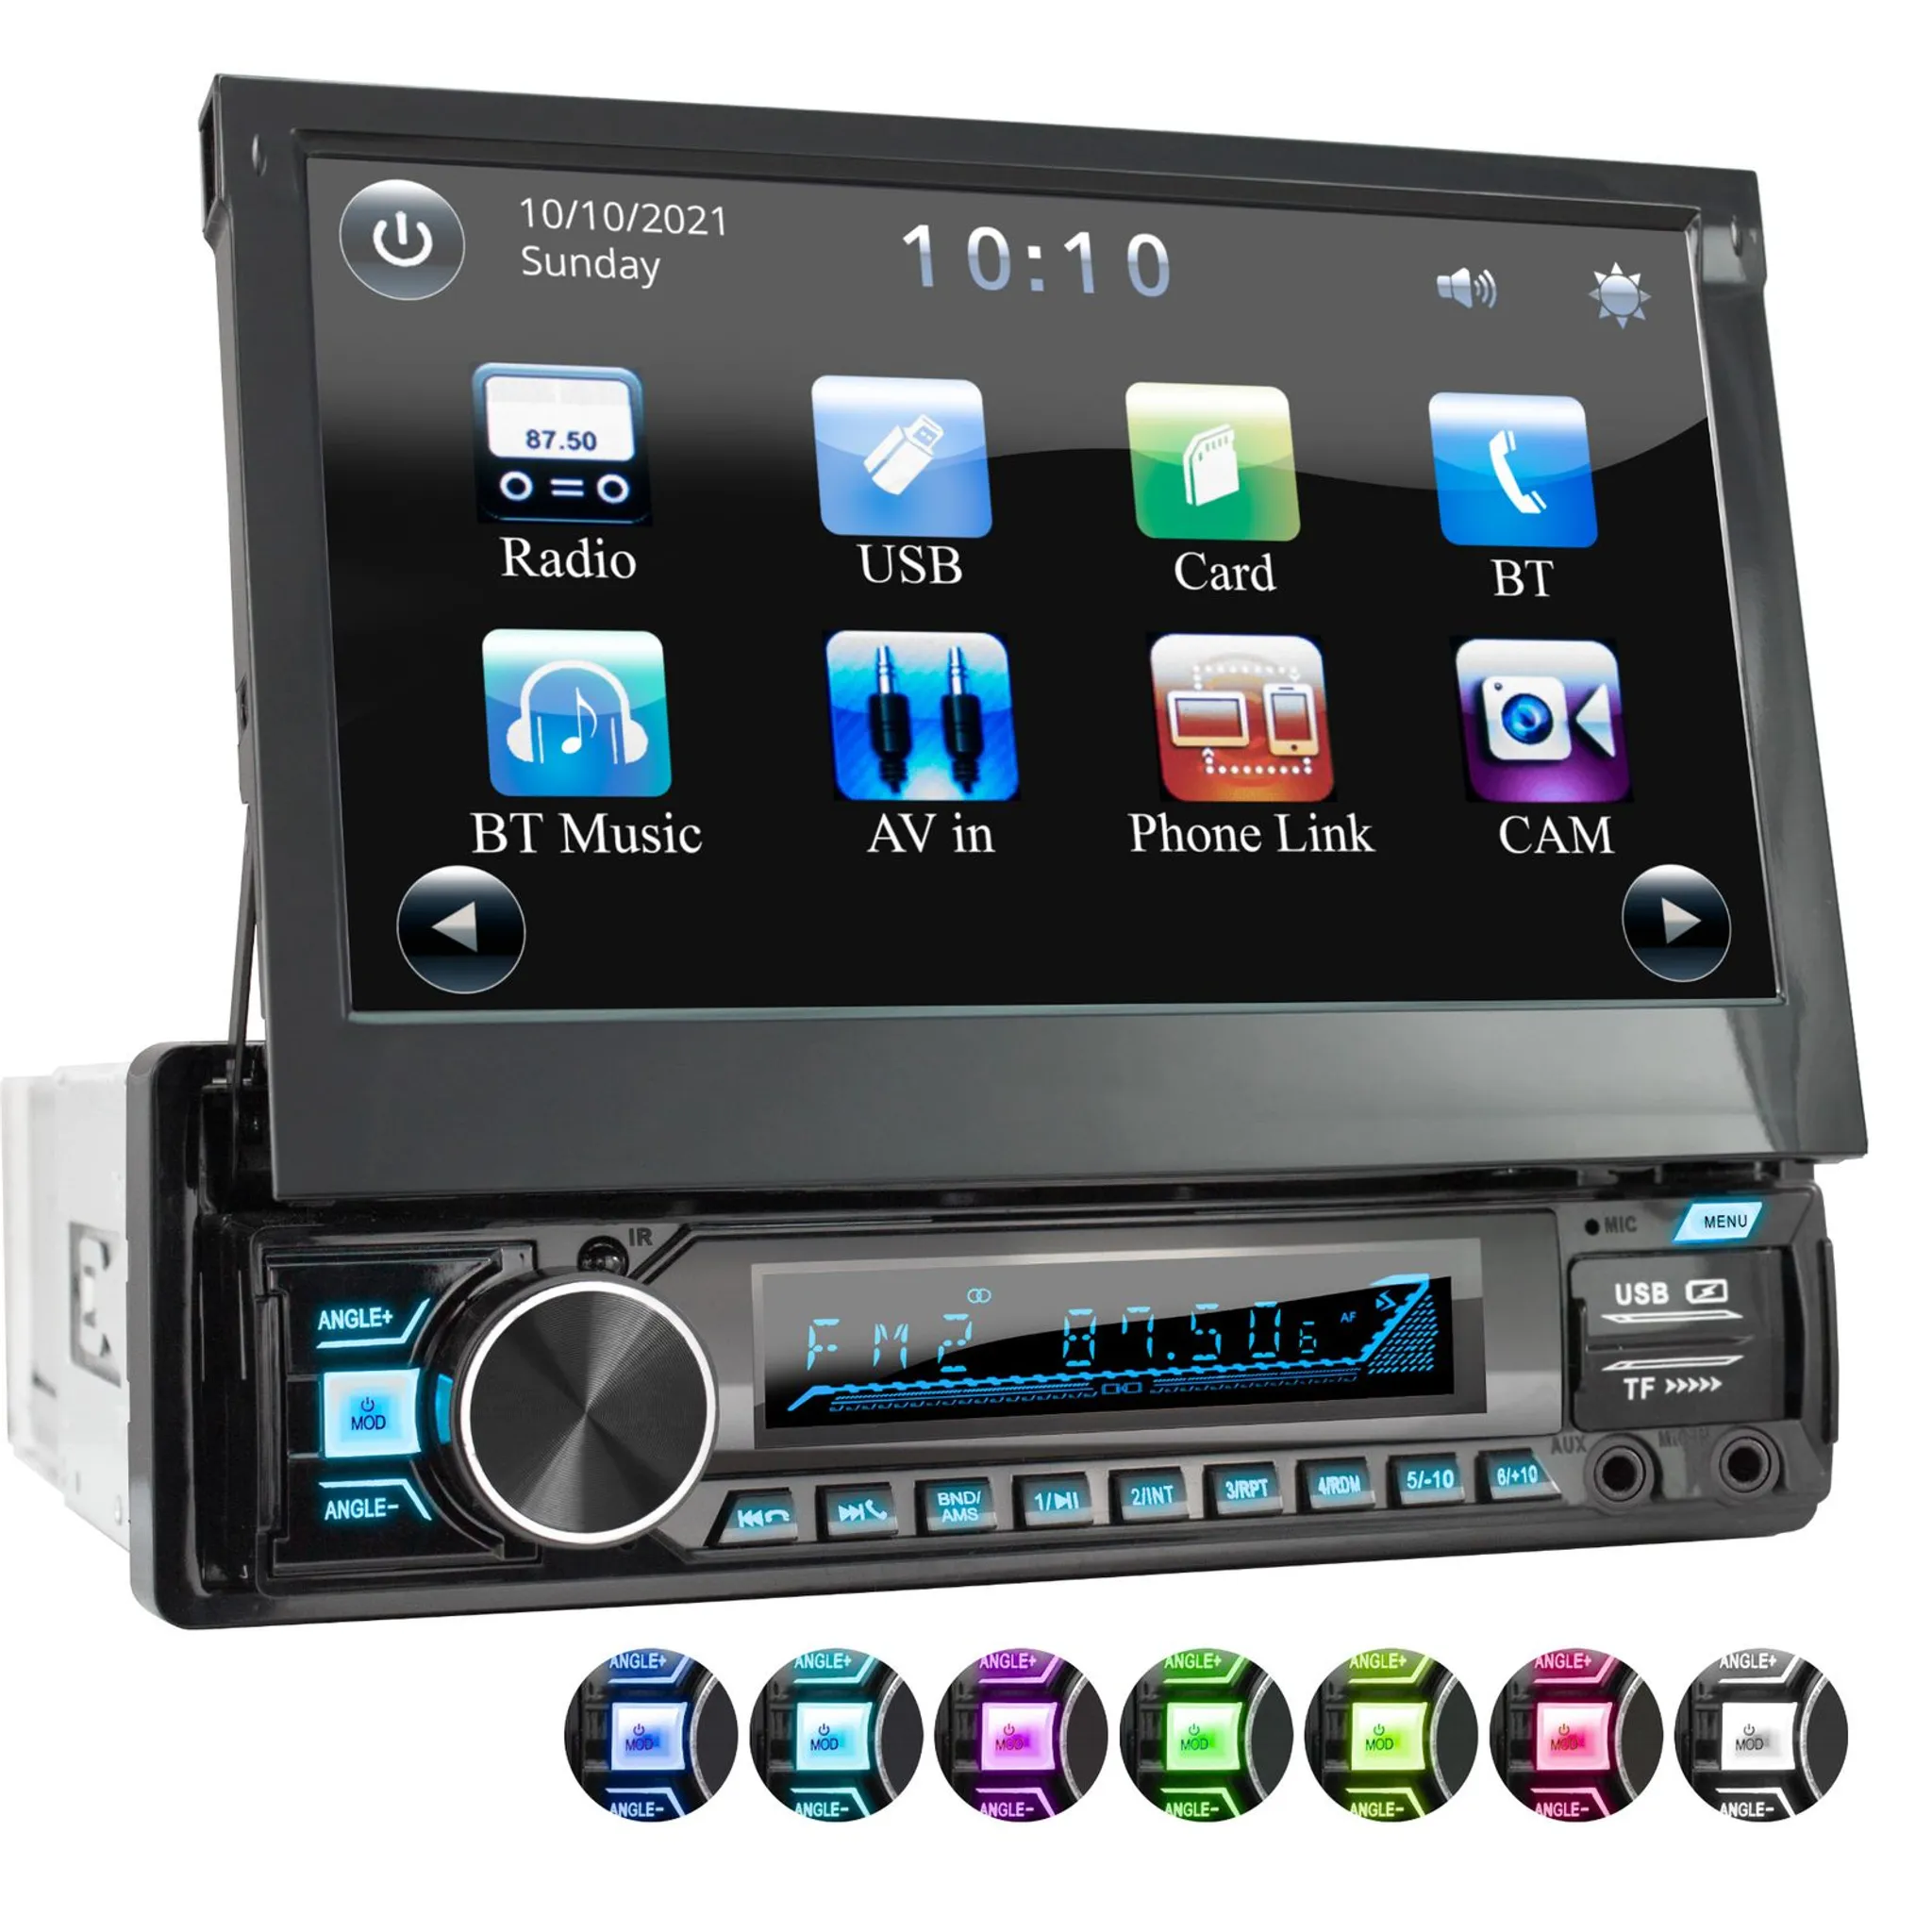 XOMAX XM-2V719 Autoradio mit 7 Zoll Touchscreen Bildschirm, Bluetooth, USB,  SD, AUX, 2 DIN